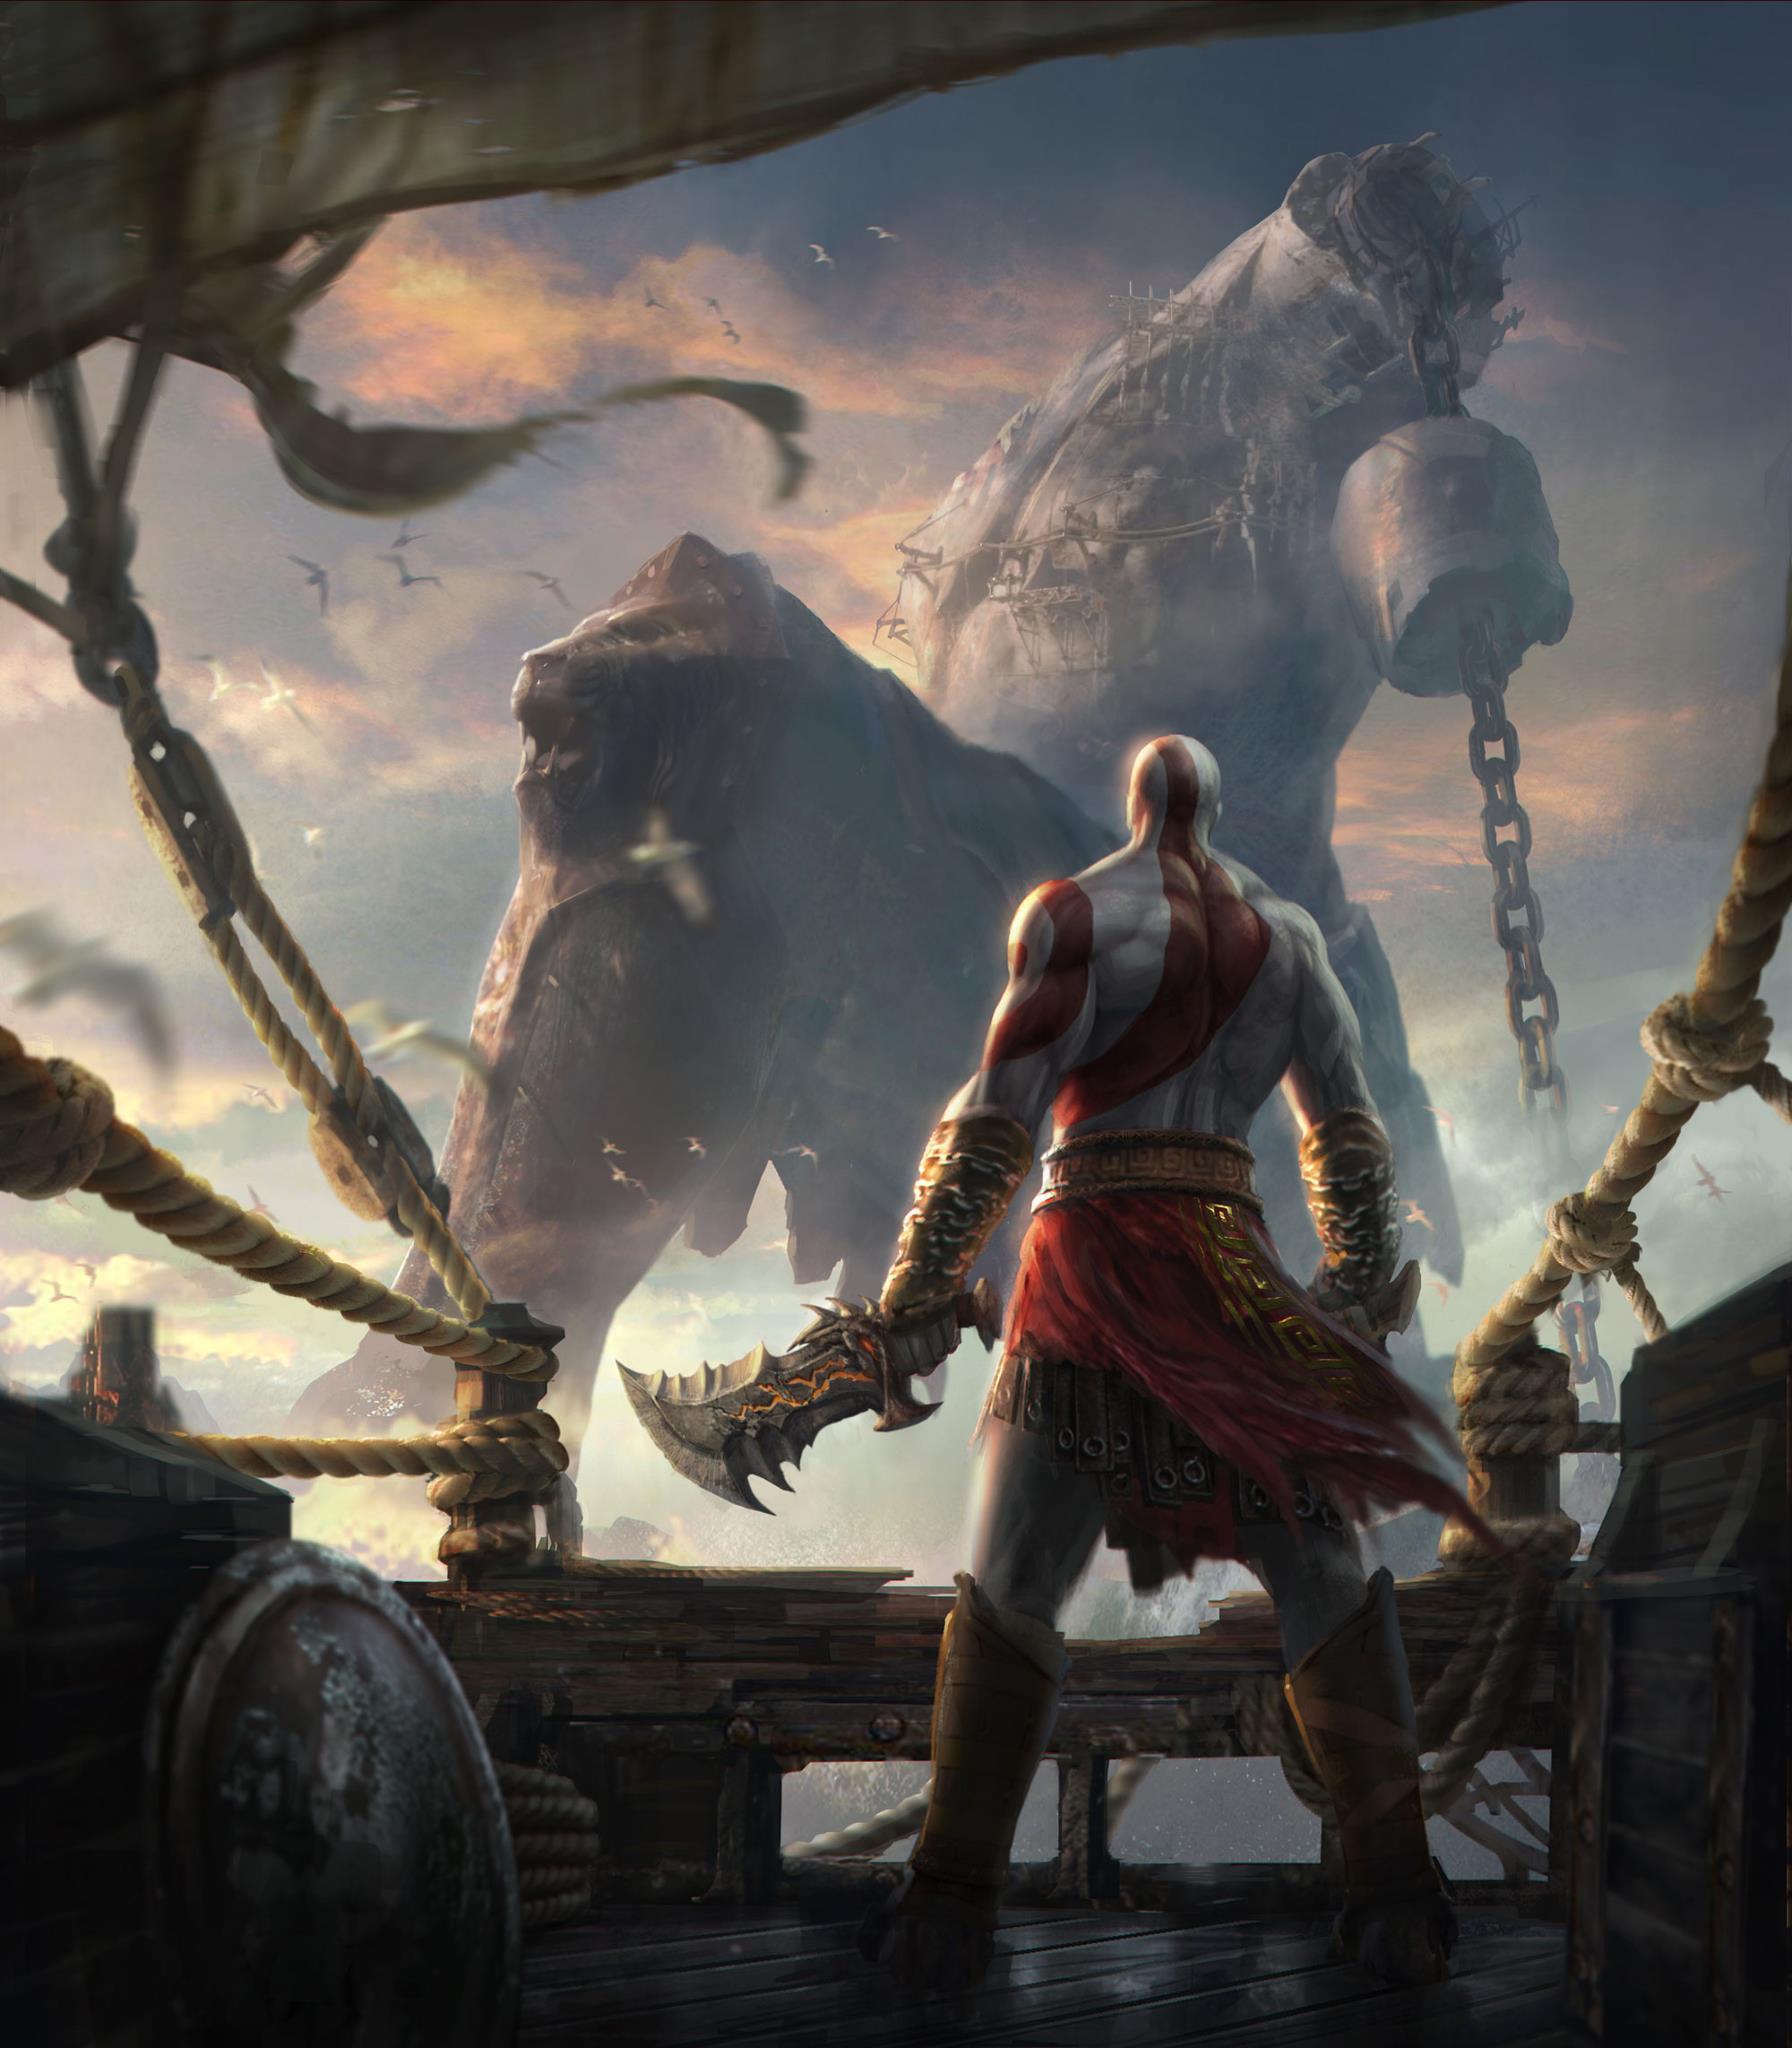 God of War: Ascension: the monster wallpaper and image